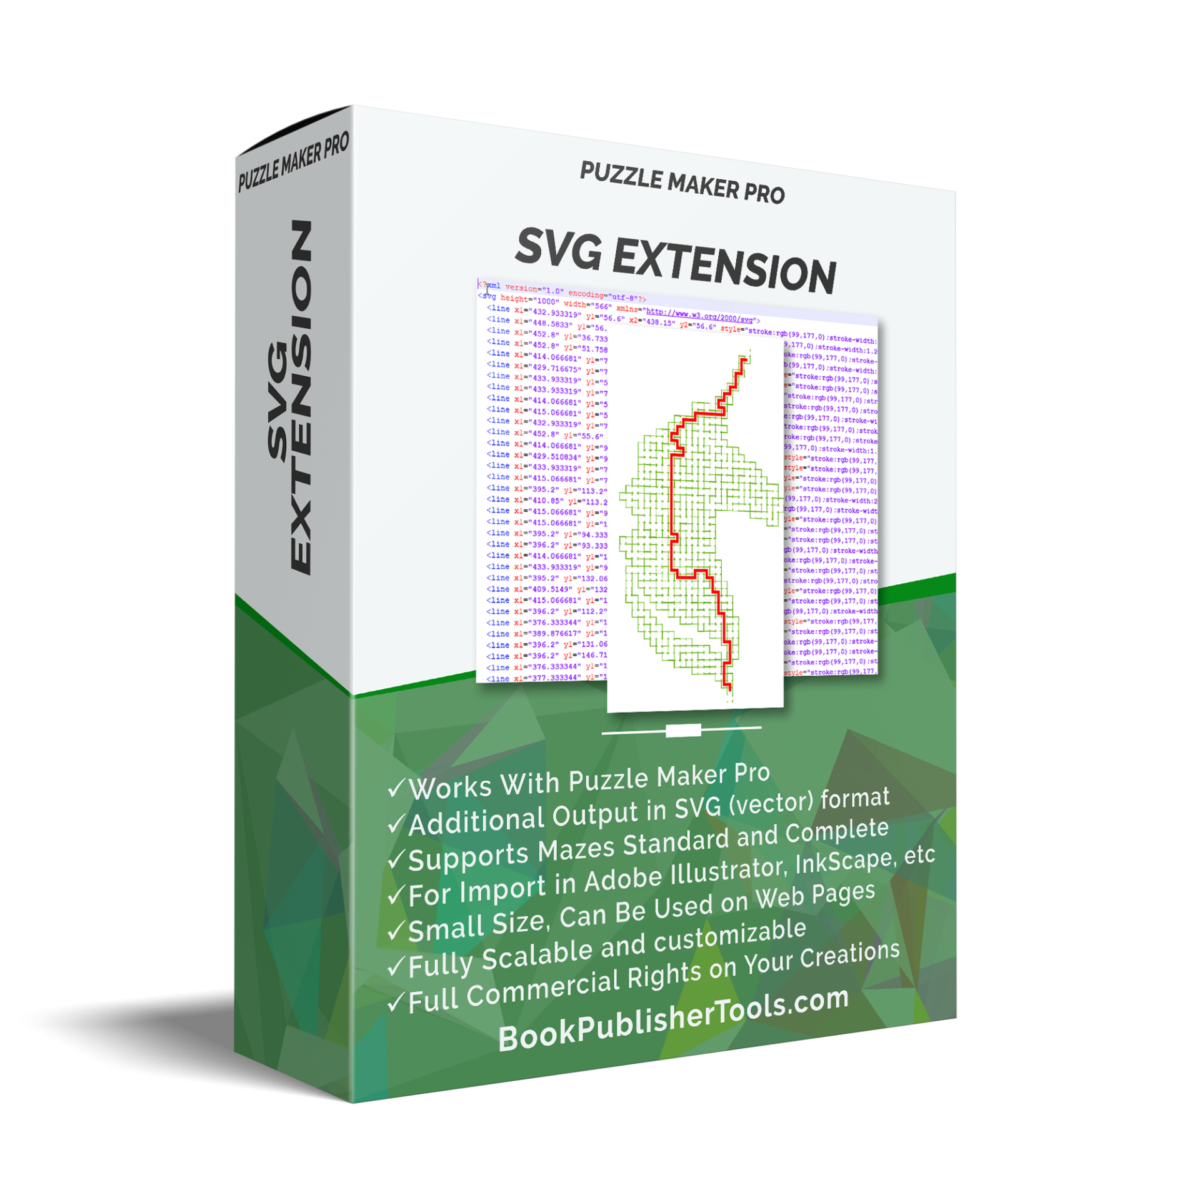 Puzzle Maker Pro - SVG Extension software box